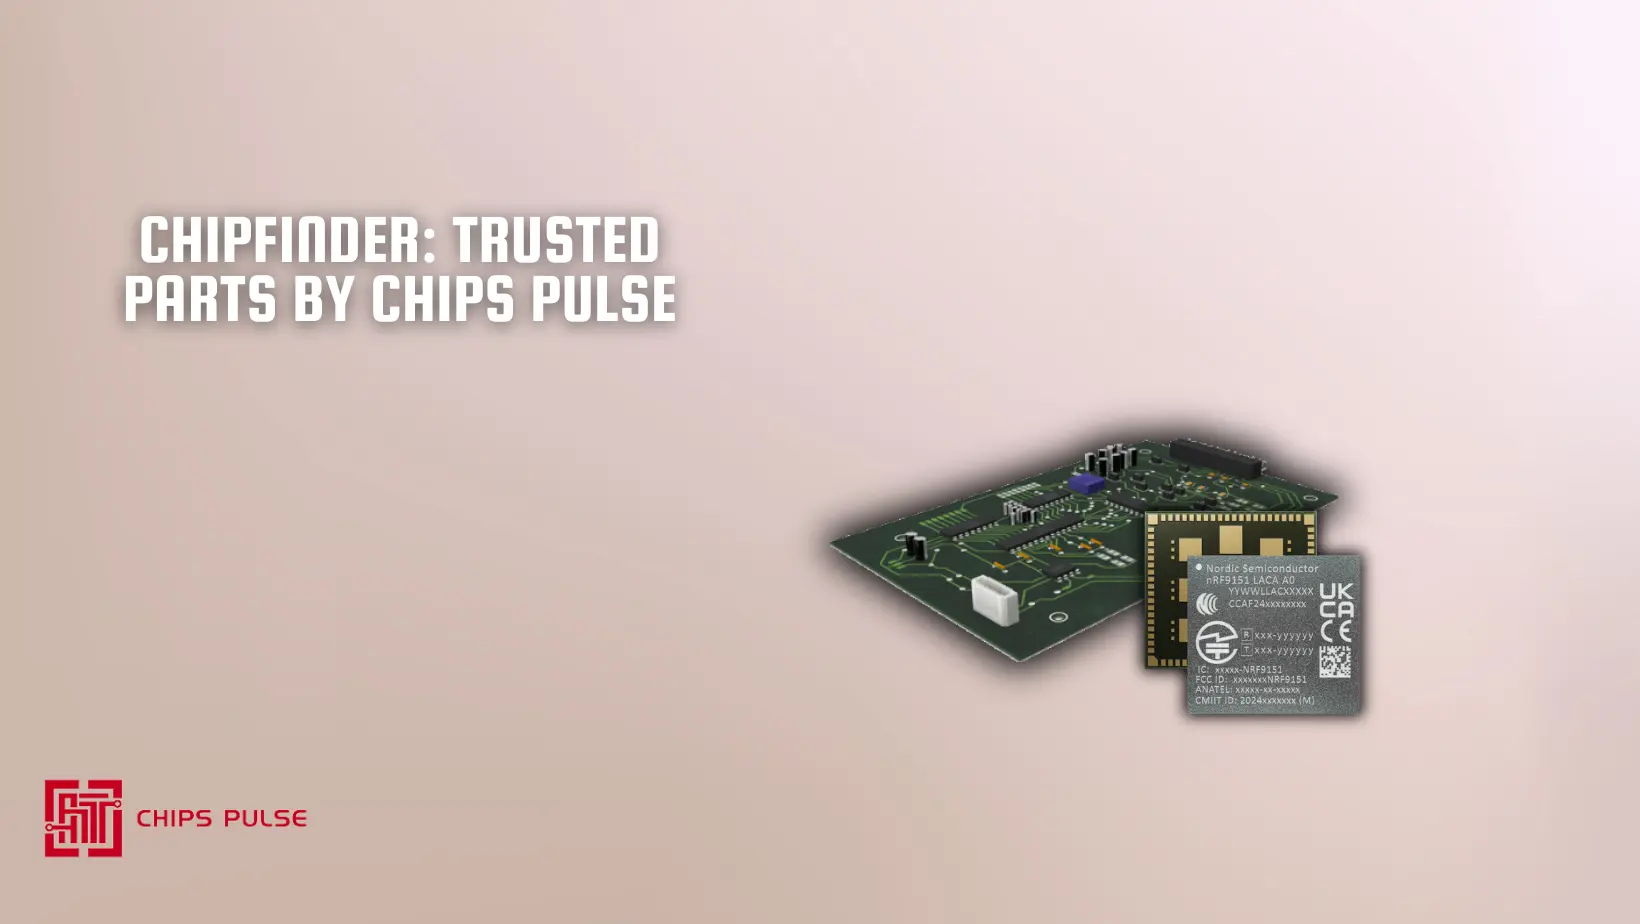 chipfinder, trusted parts